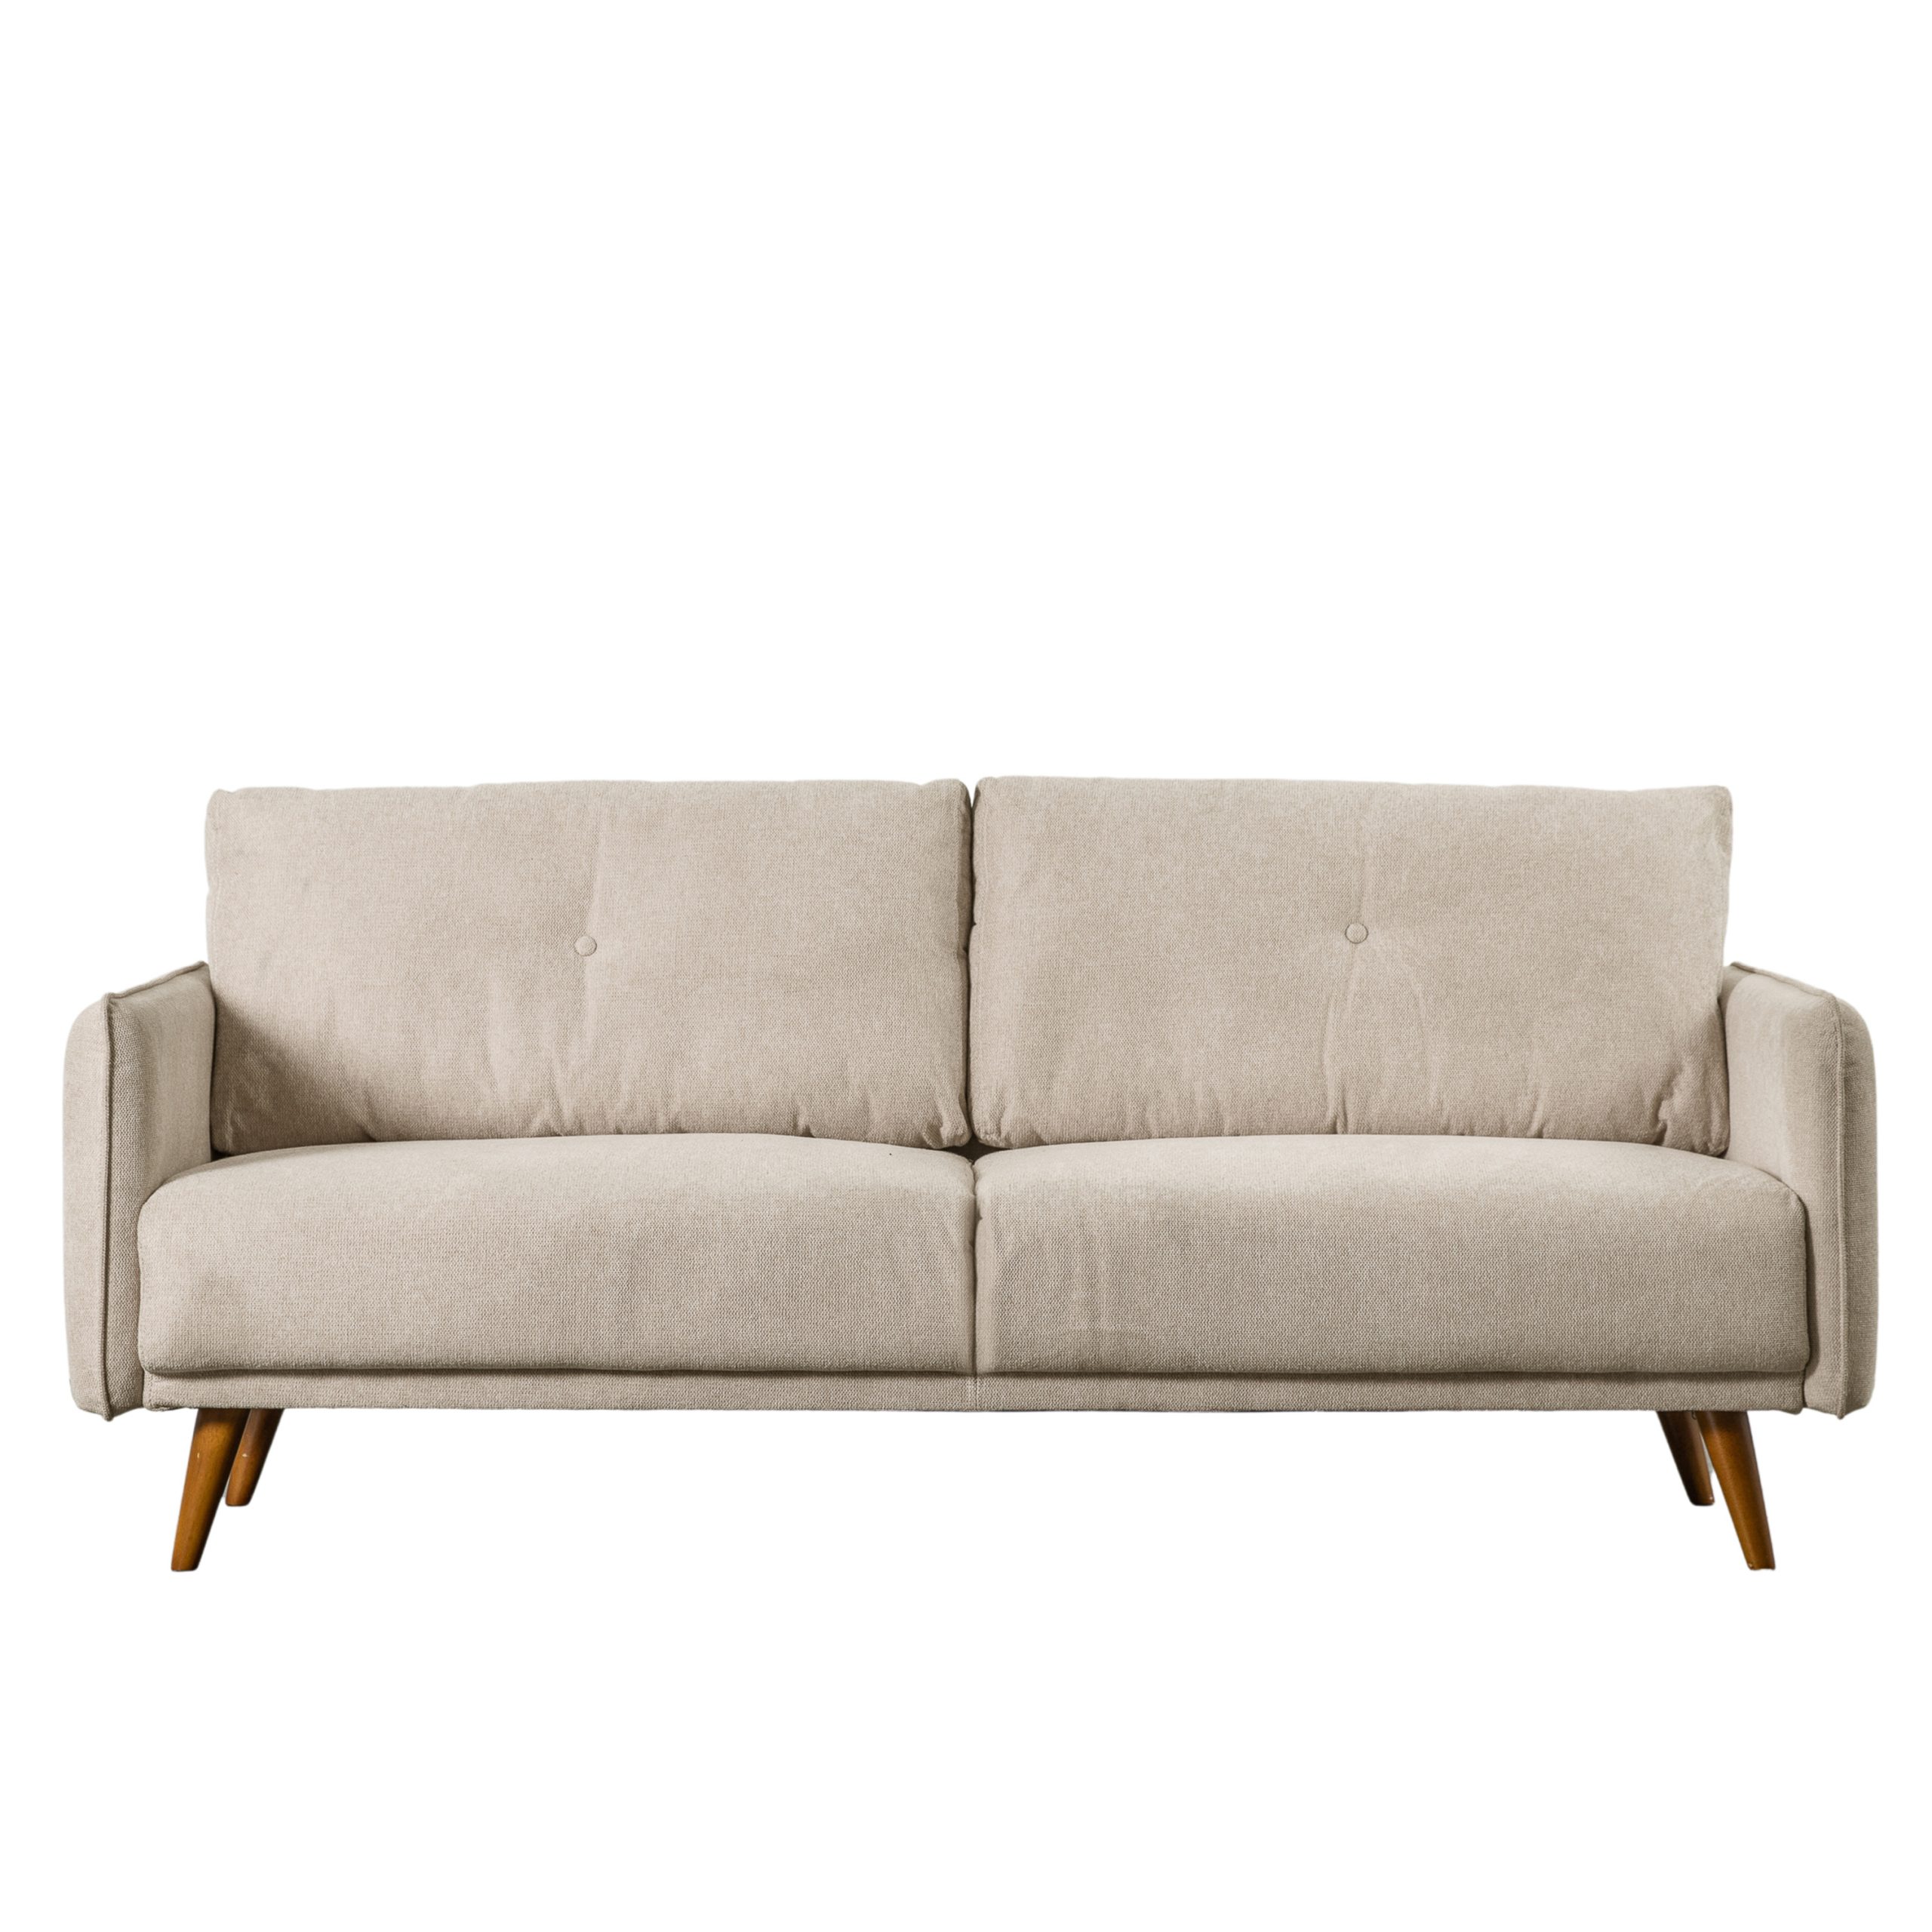 Gallery Direct Farringdon 2 Seater Sofa Oatmeal Linen